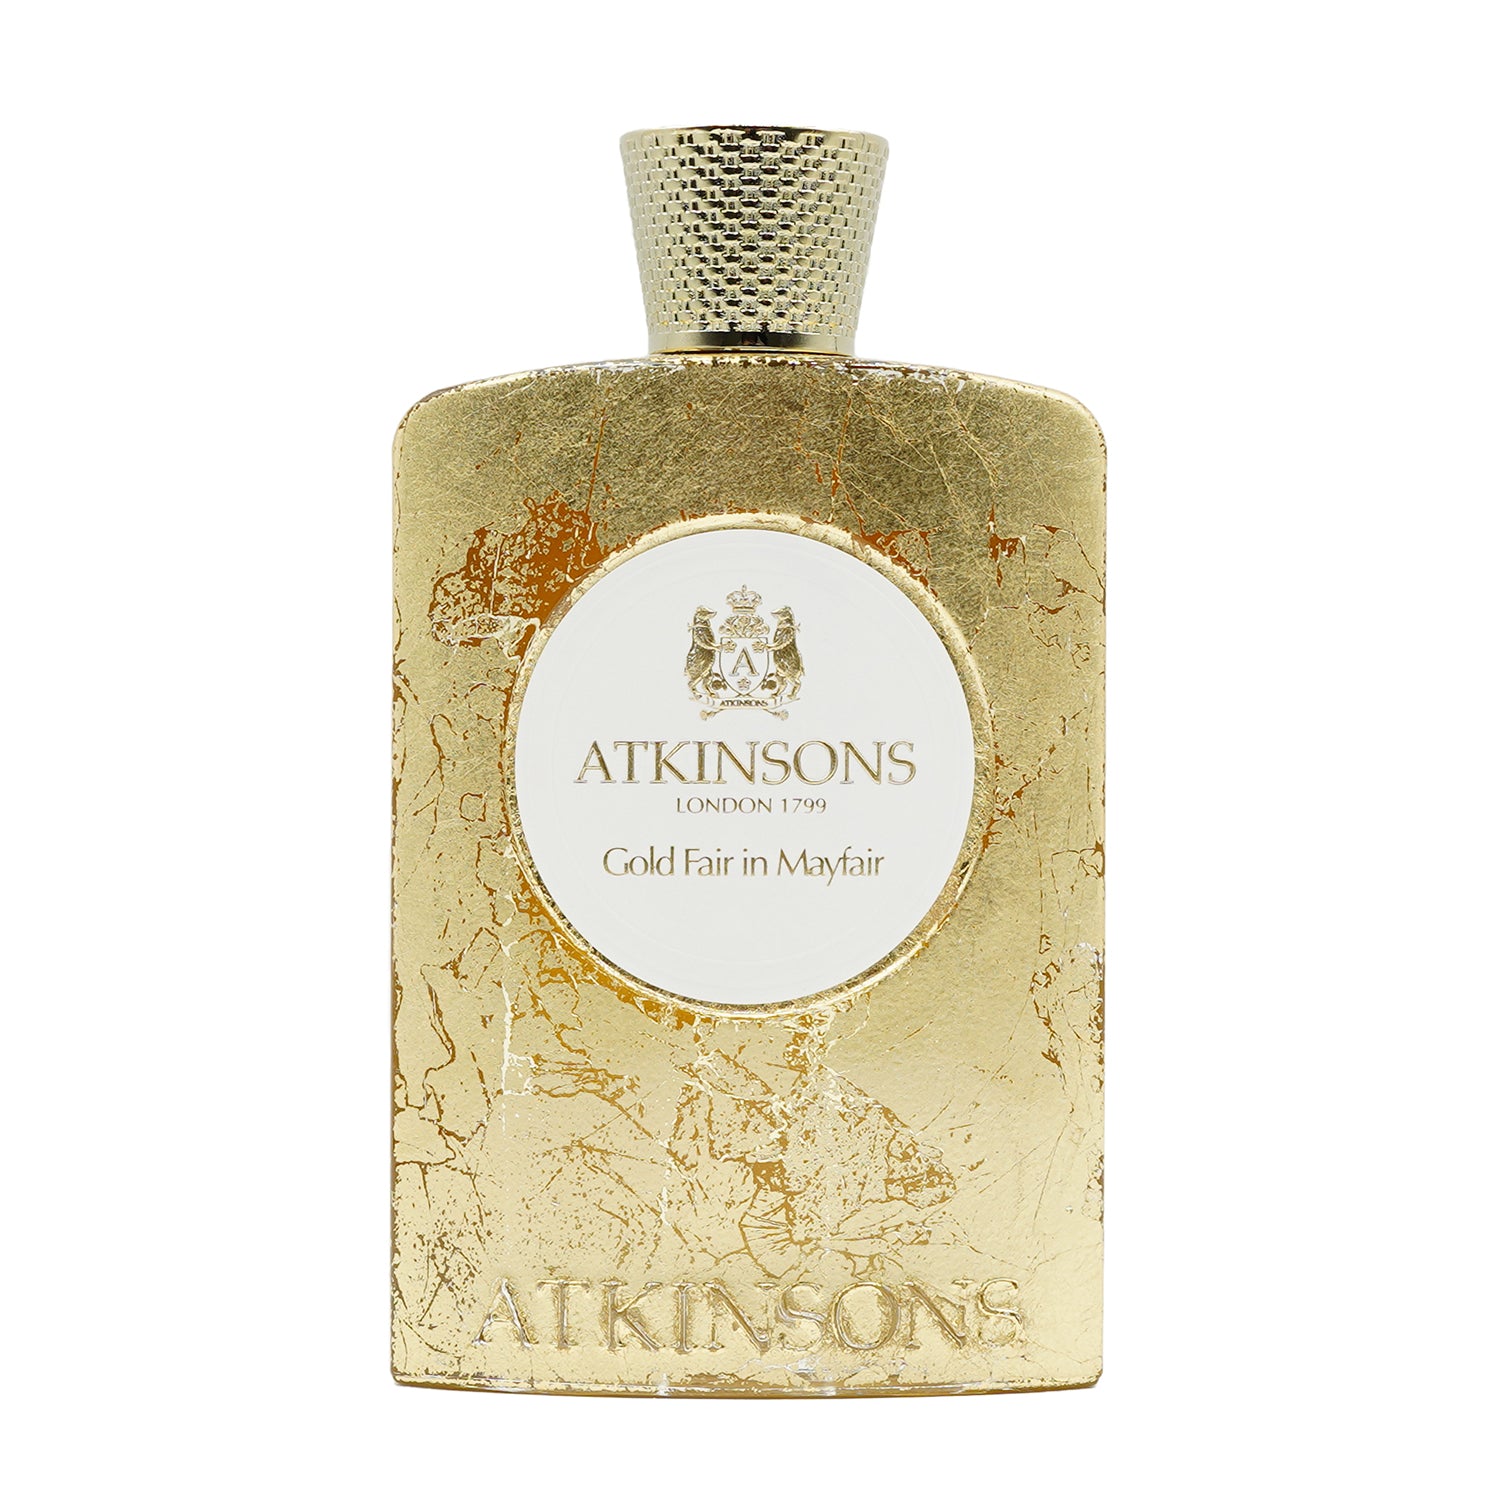 Atkinsons | Gold Fair bottling in Mayfair 